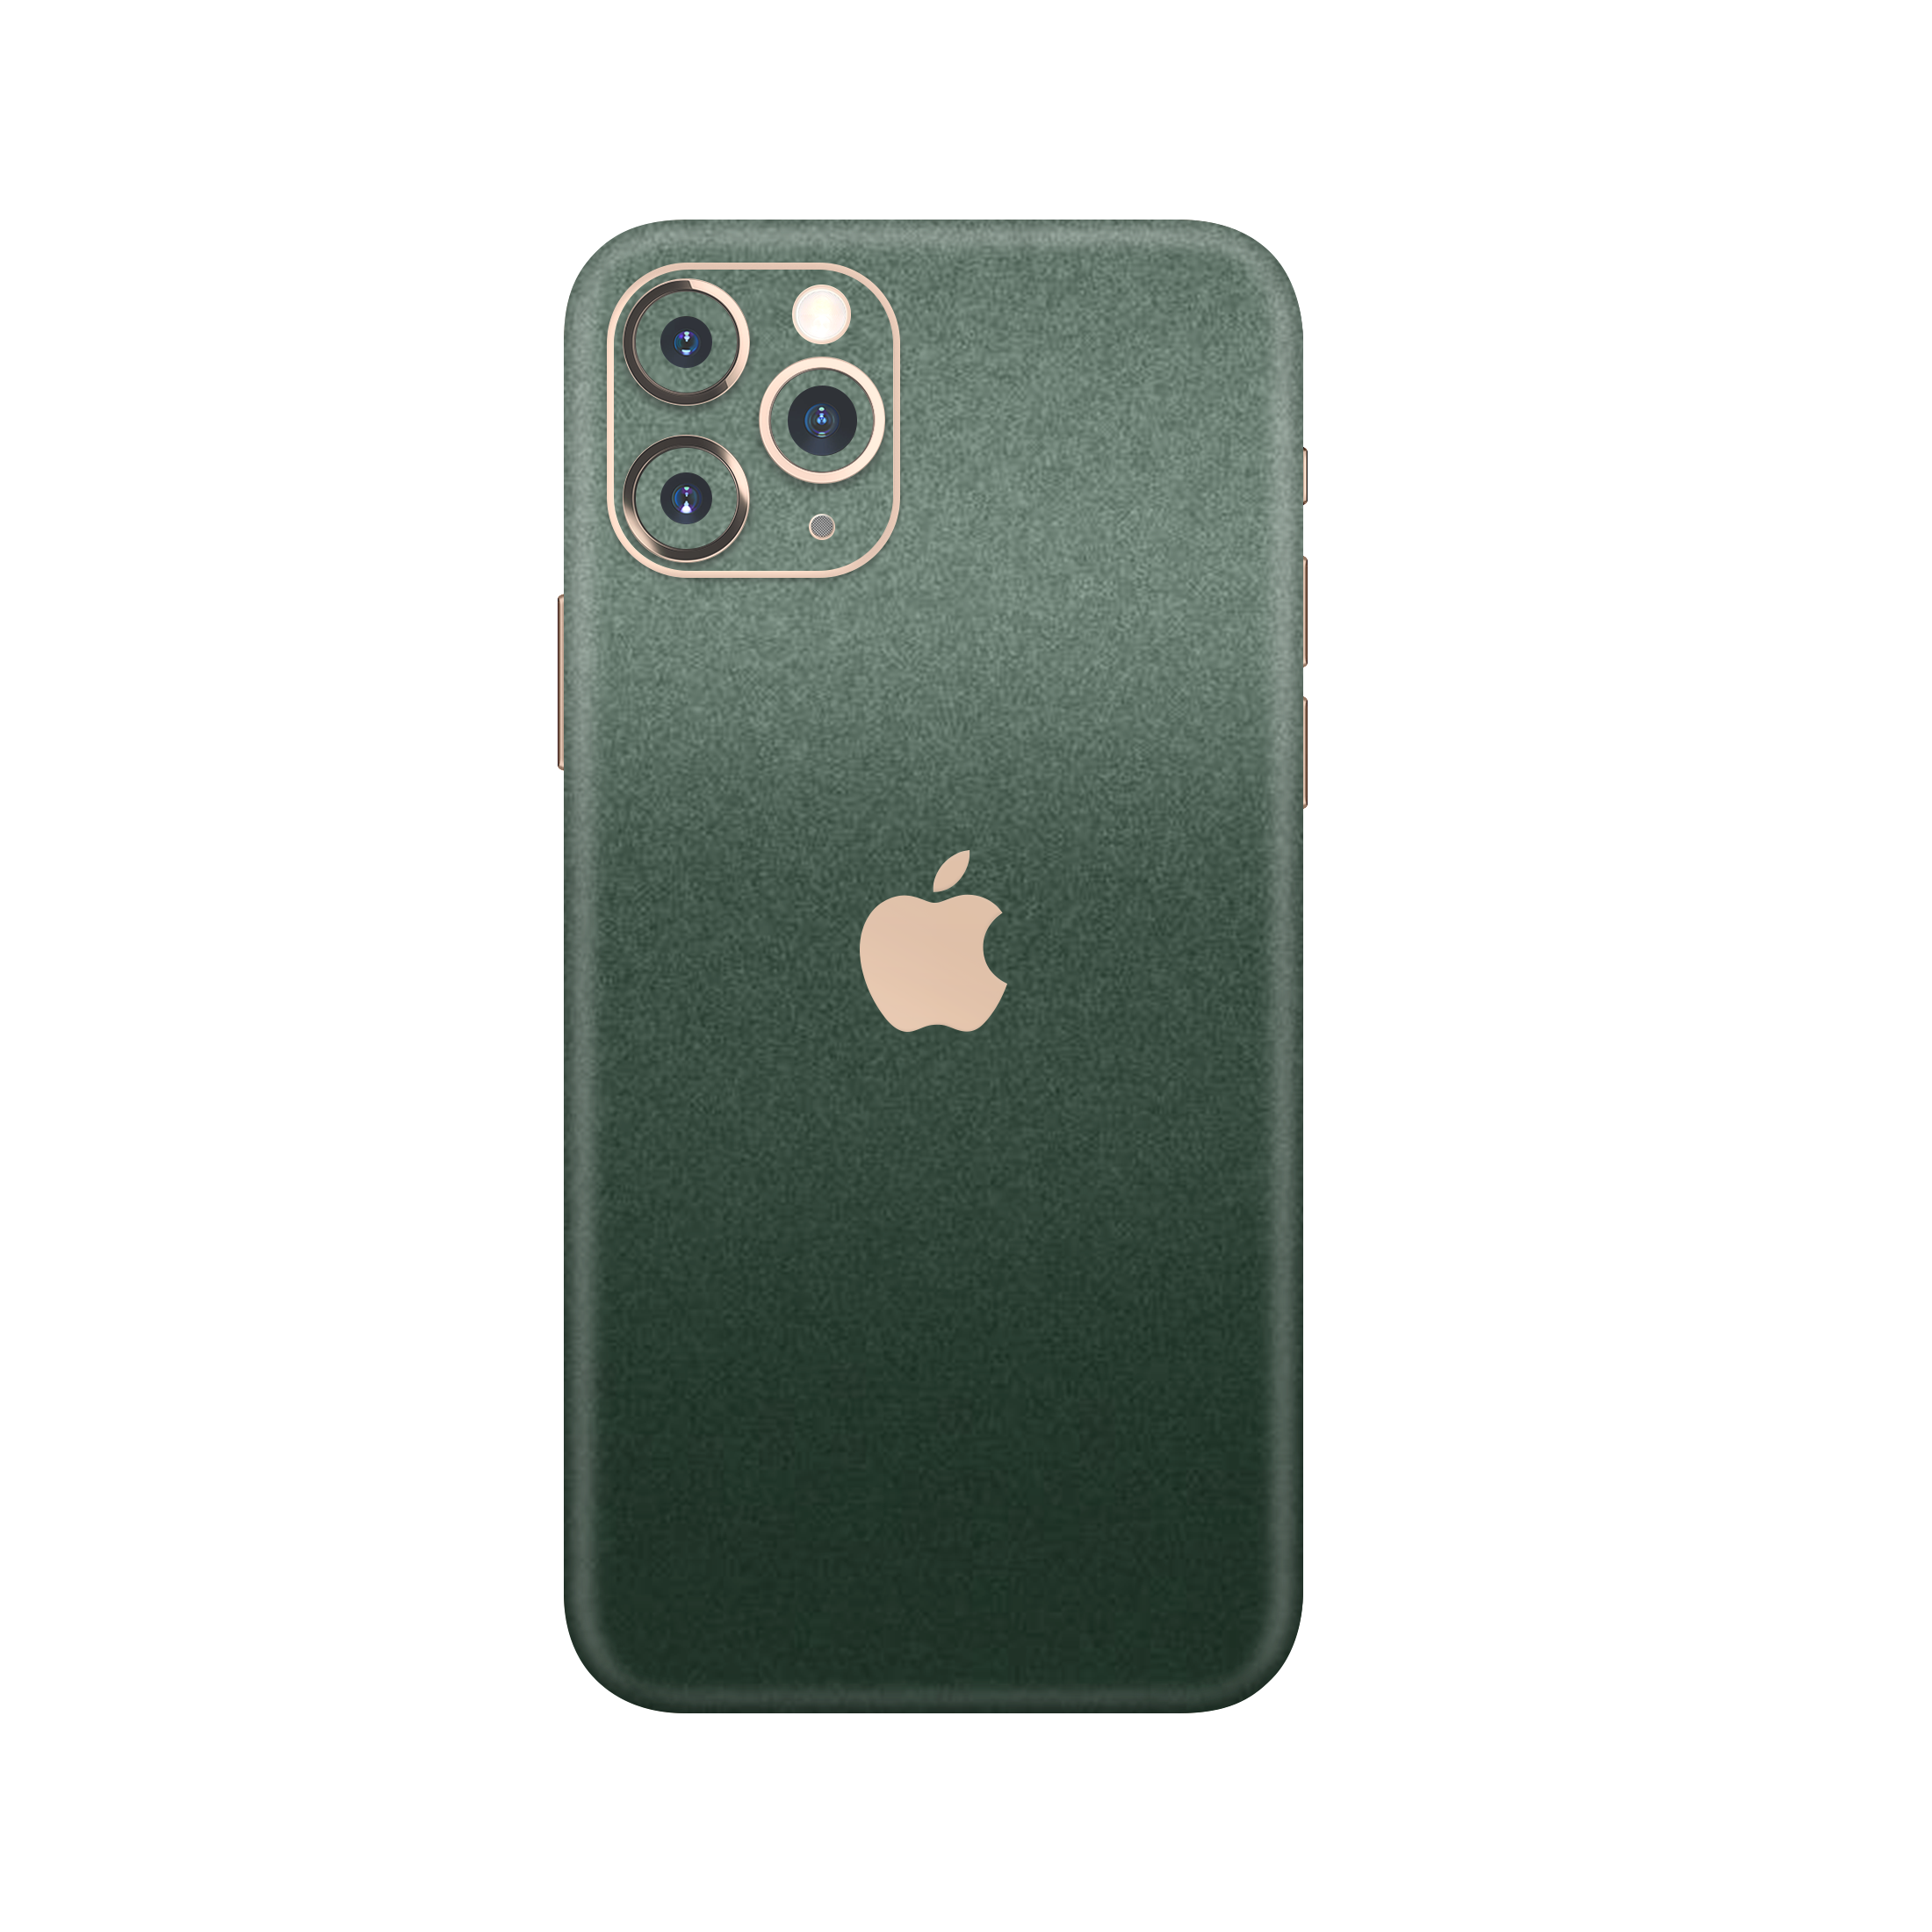 Pine Green Metallic Skin For iPhone 11 Pro